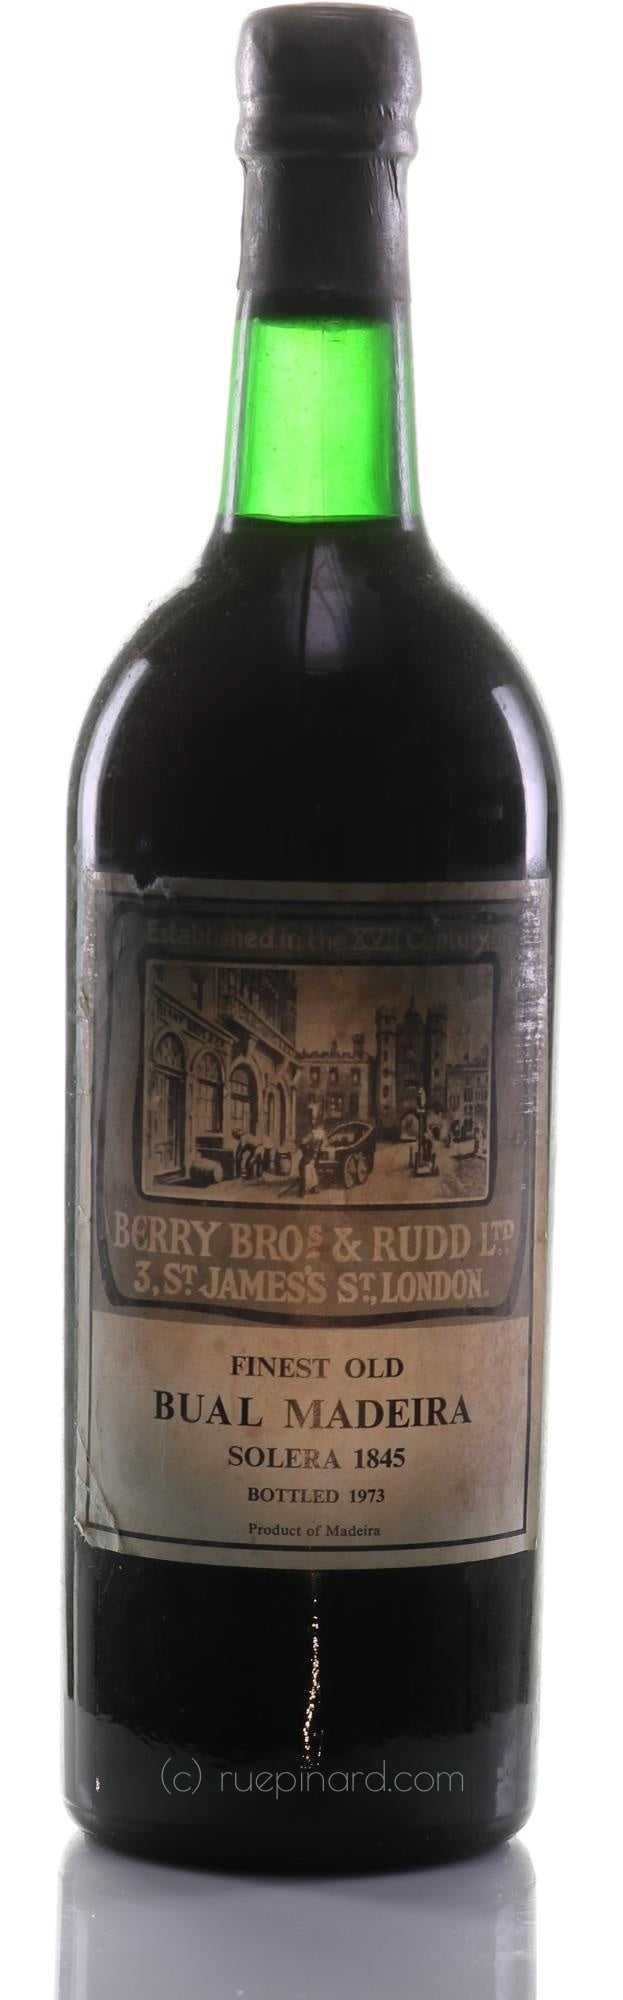 Berry Bros. & Rudd Madeira 1845 Bual Solera - Rue Pinard